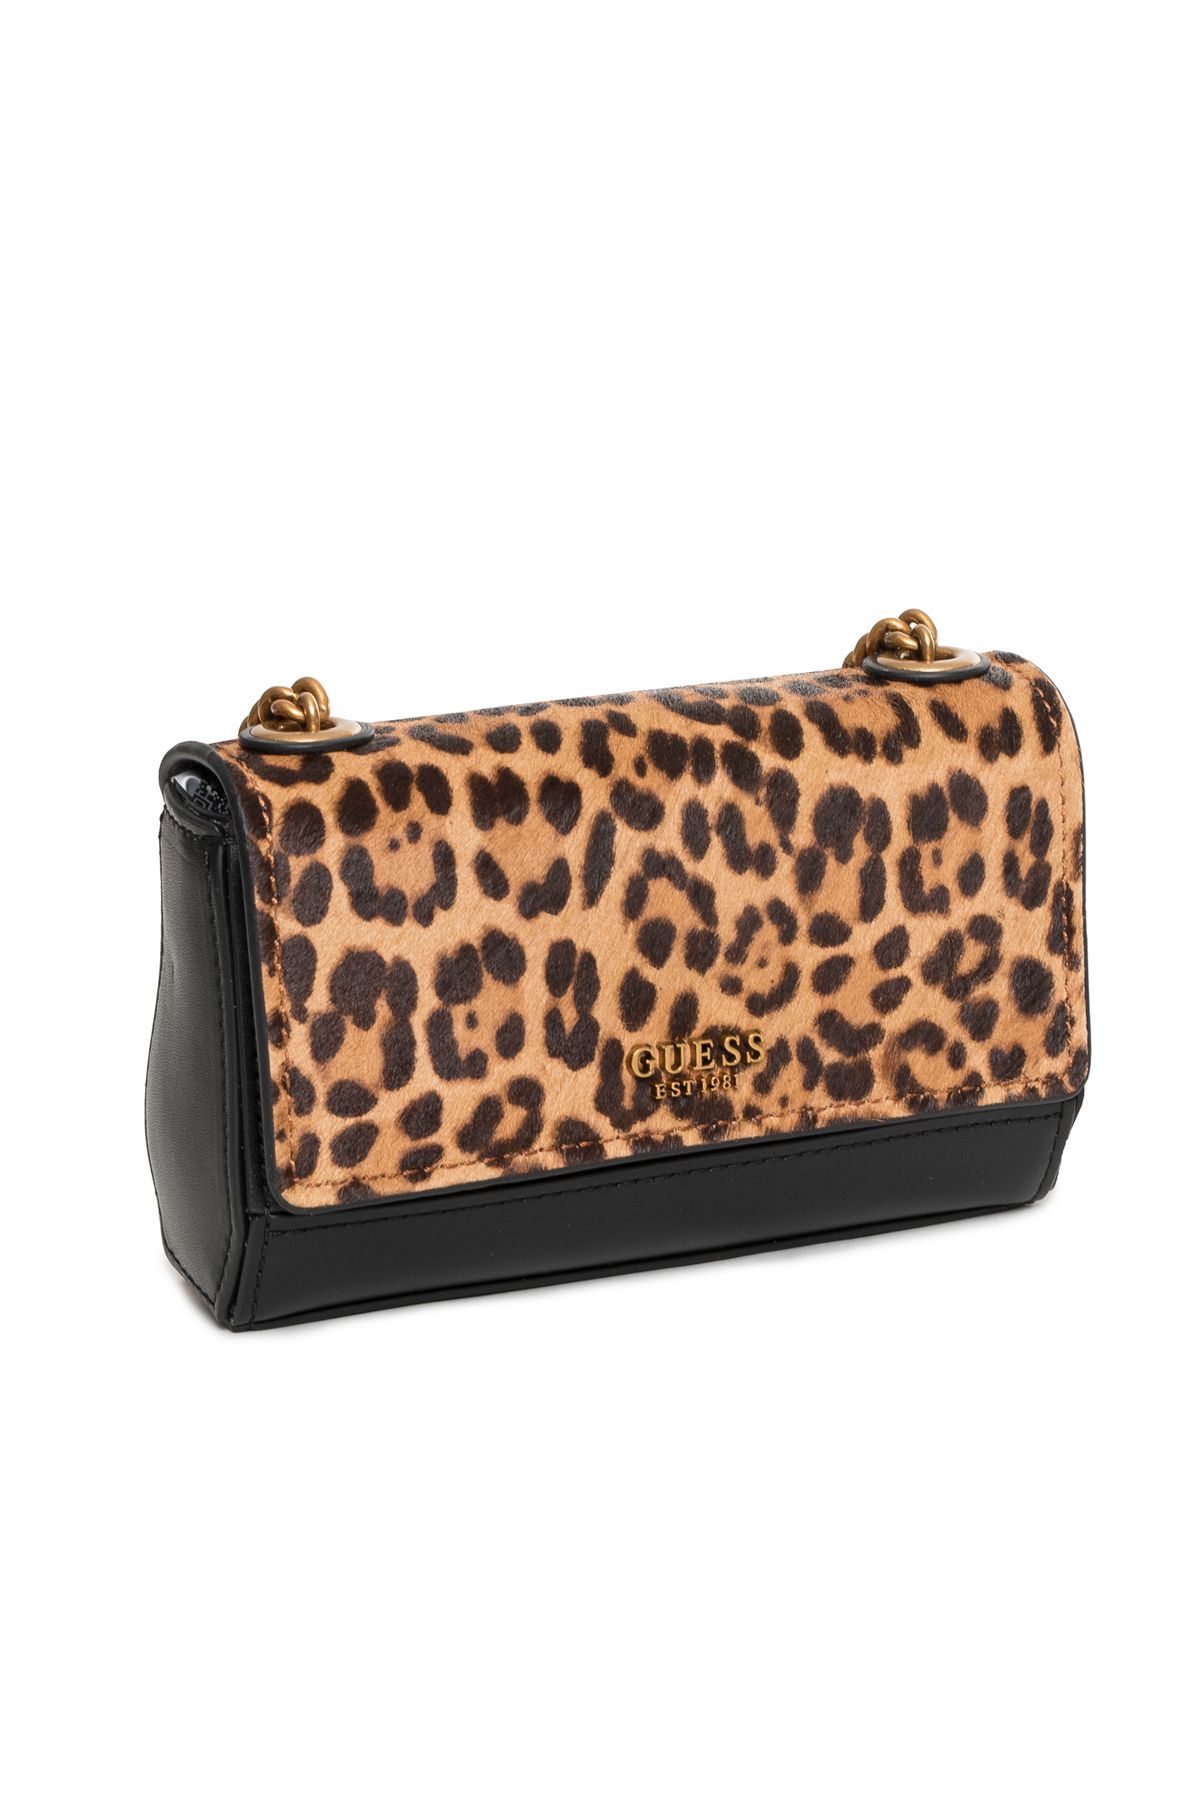 Guess Sexy Jungle Brown Tote Ladies Bag Handbag Purse - Guess bag -  885935201223 | Fash Brands